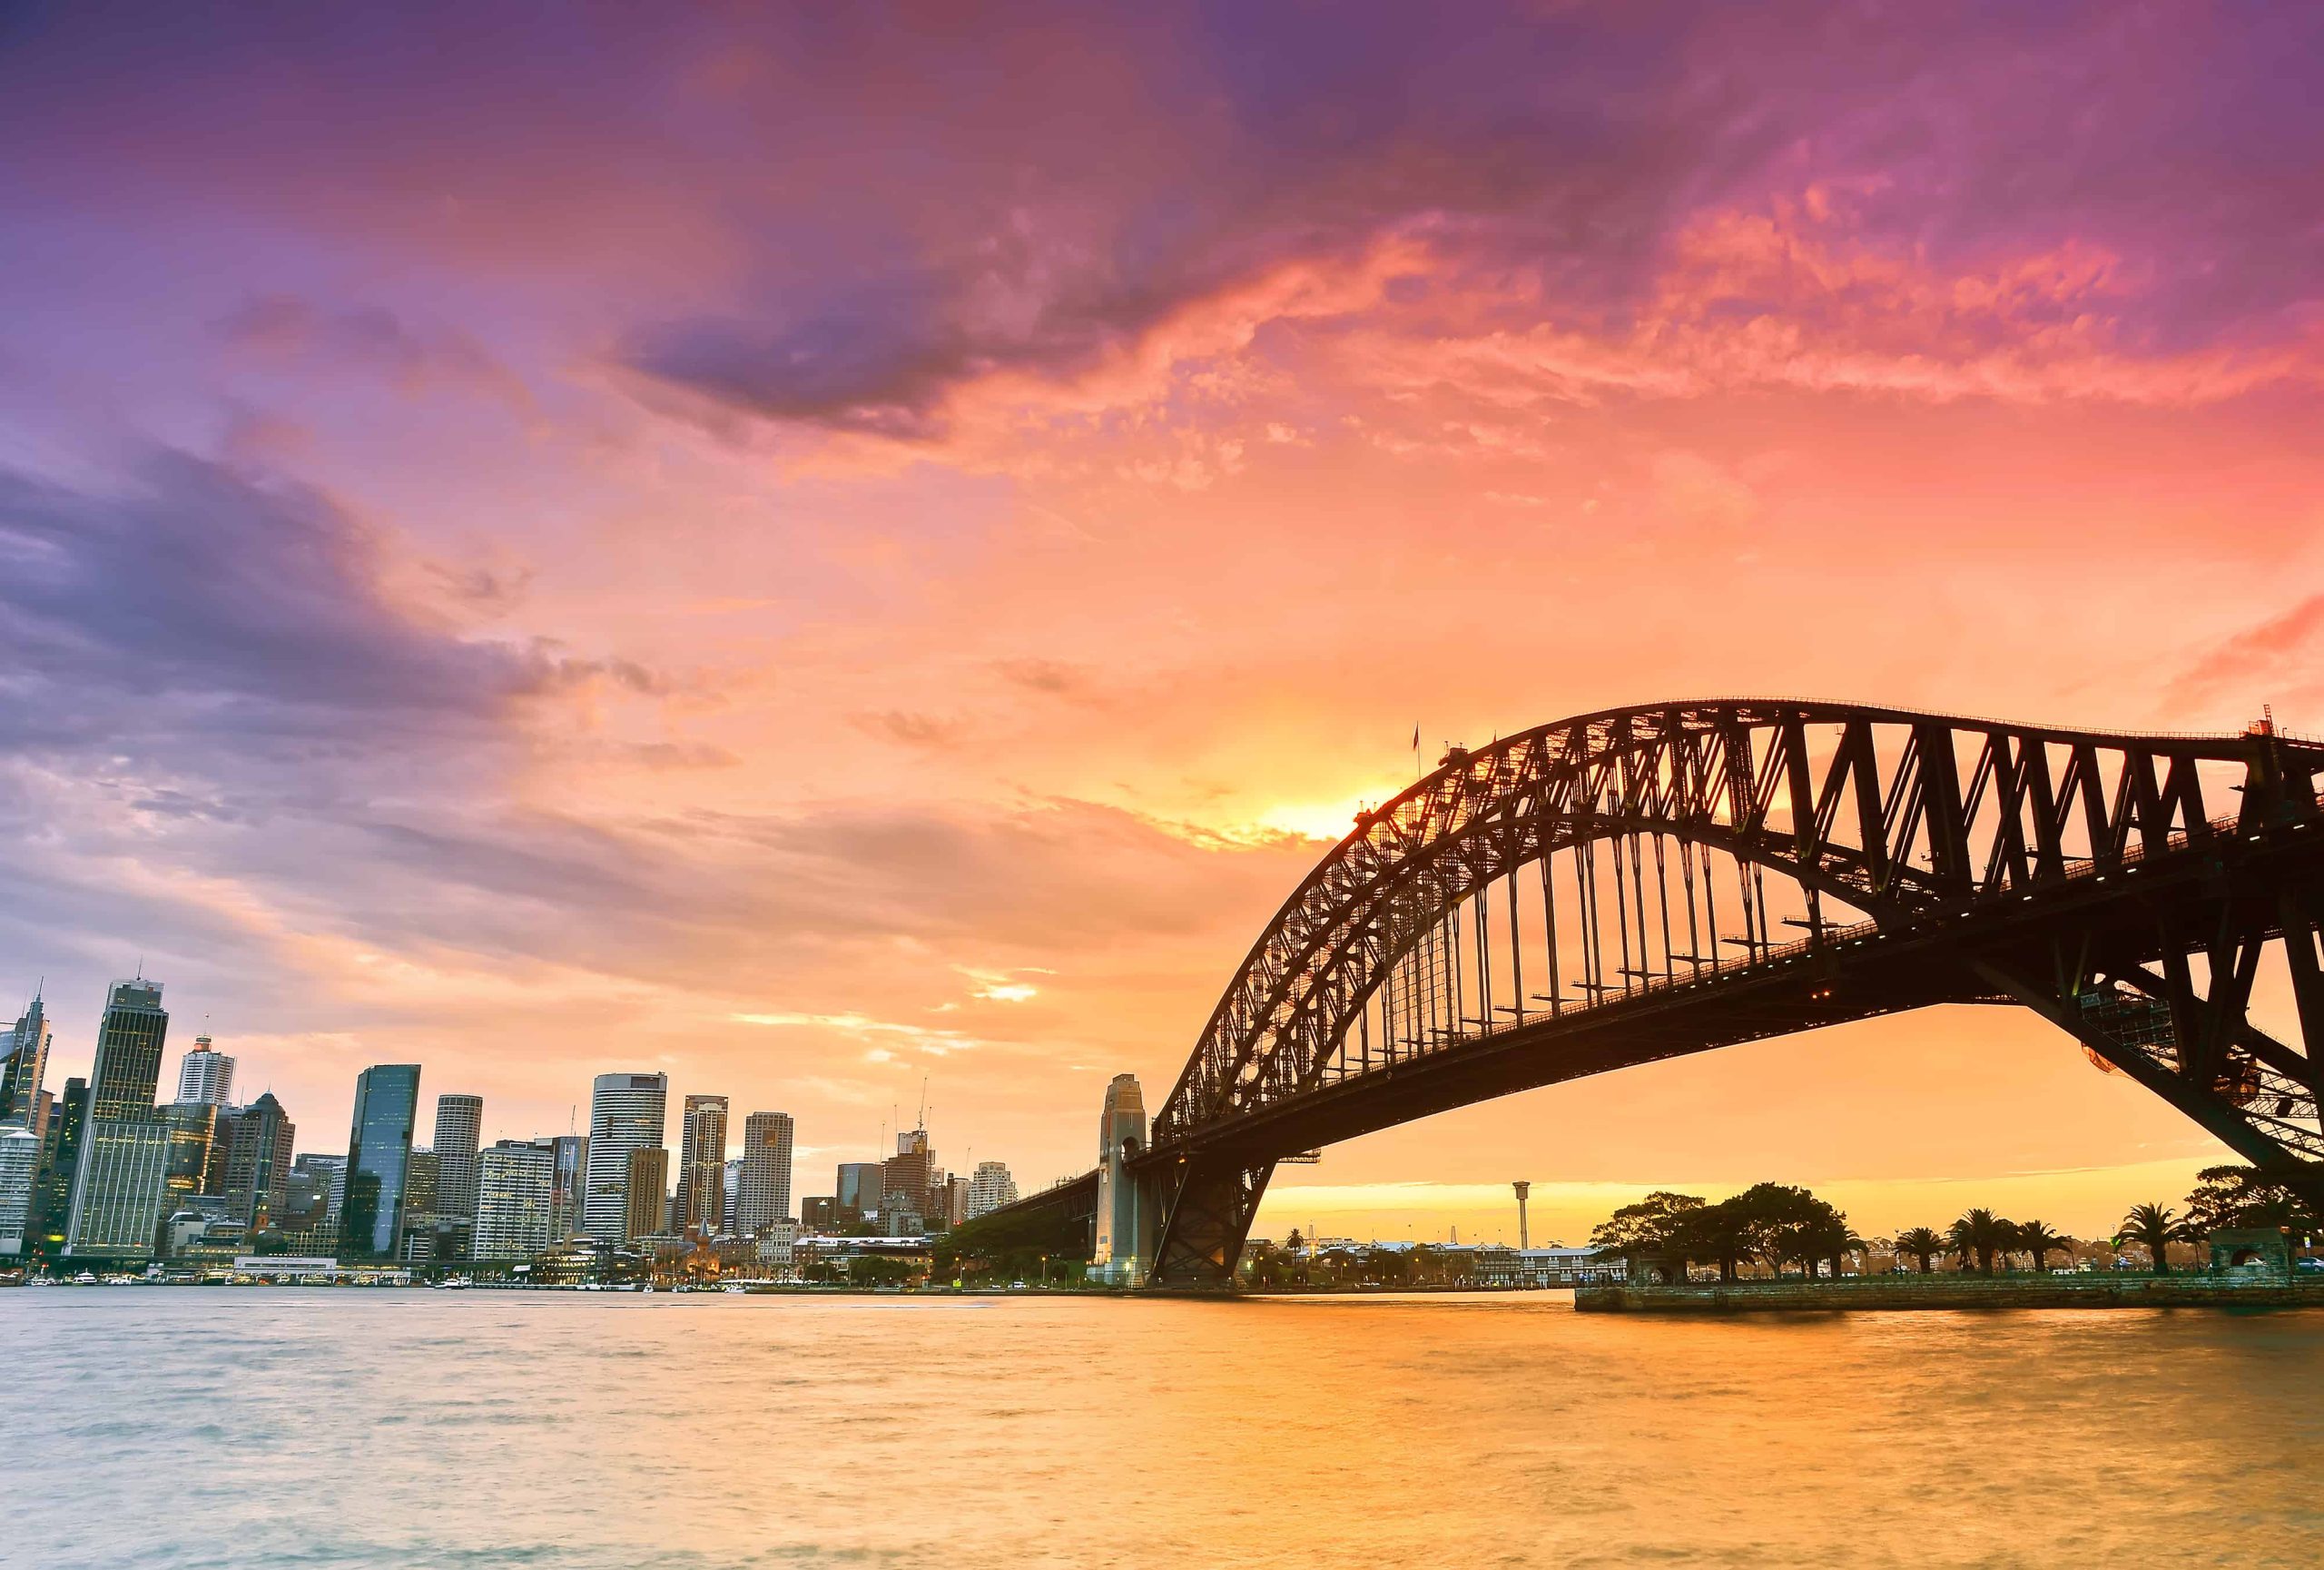 Beautiful sunset scene on the Sydney Harbor Bridge